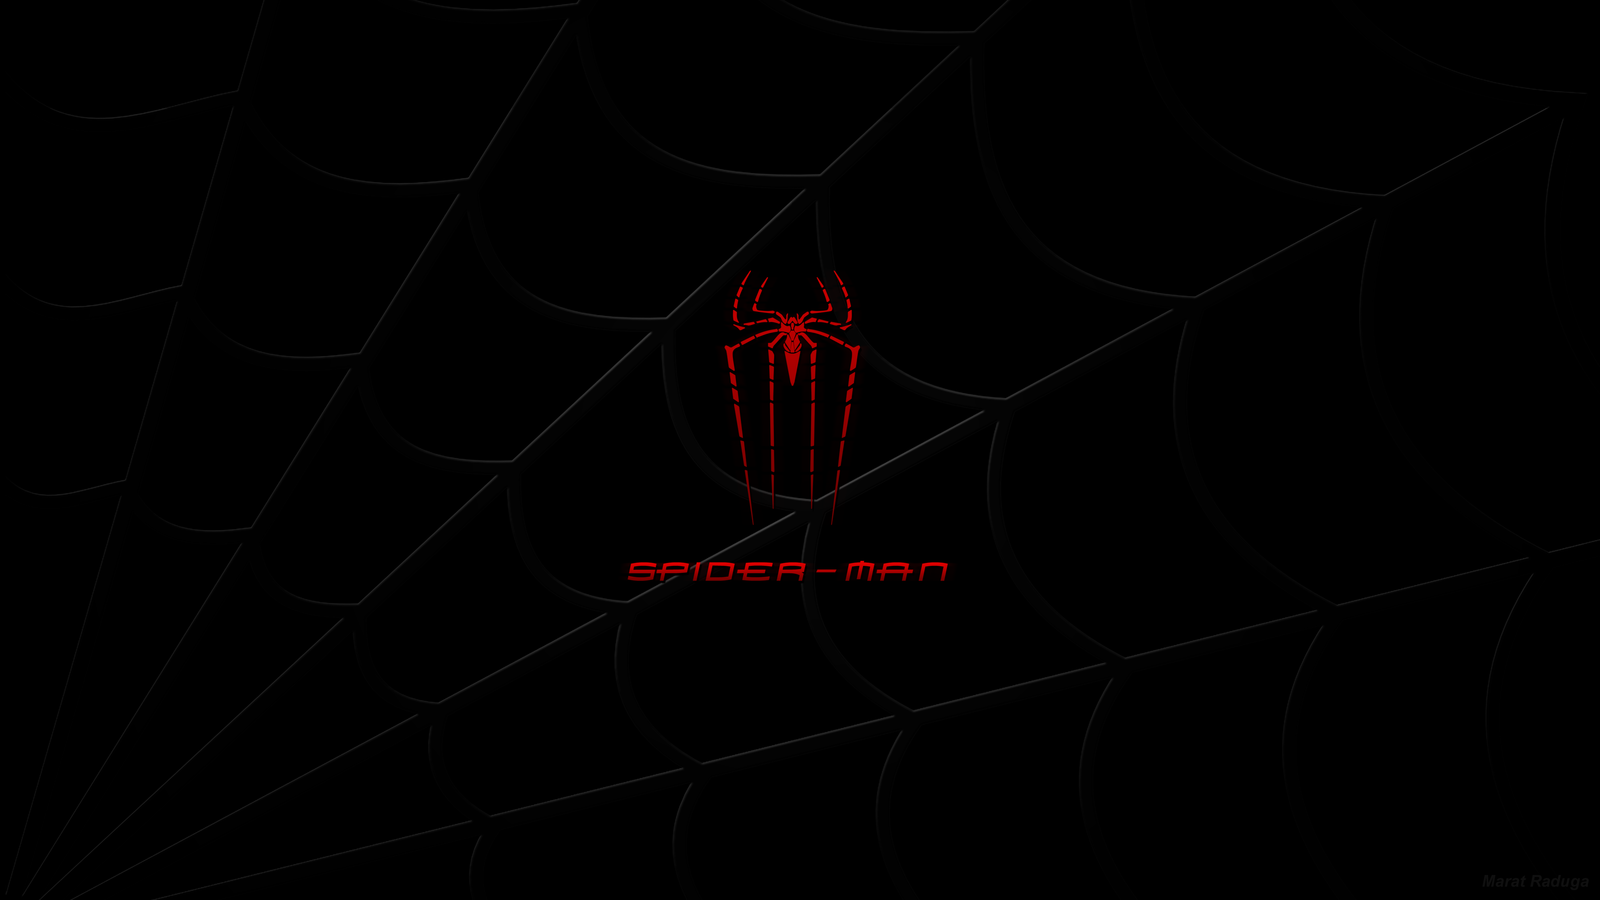 Spider-Man Wallpaper 3840x2160. Тёмные обои на рабочий стол.